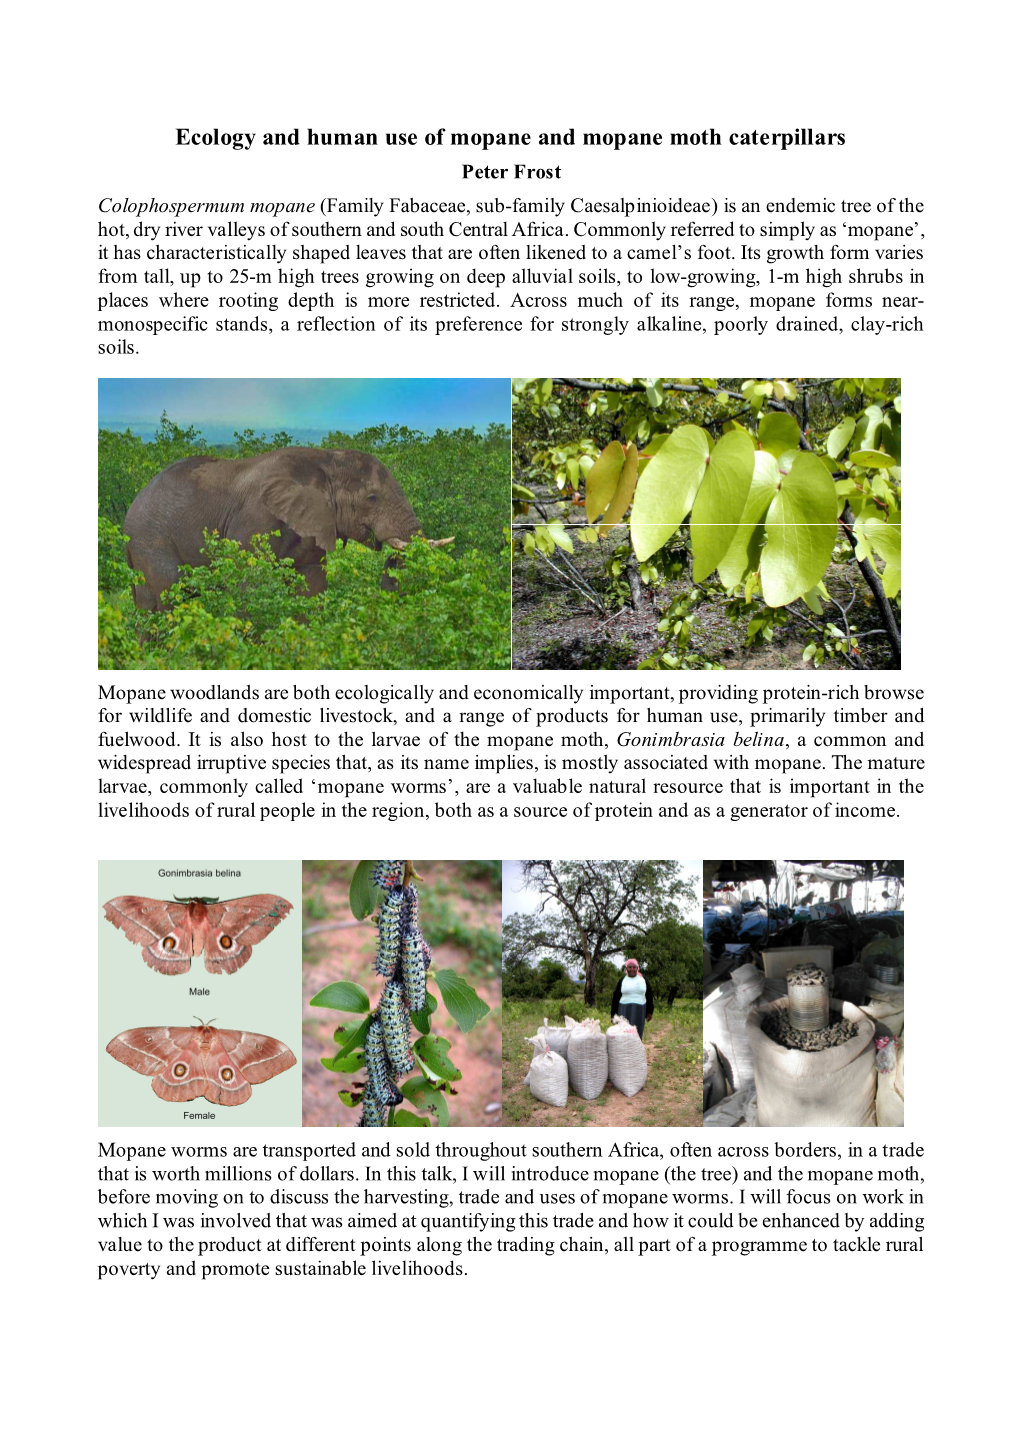 Ecology and Human Use of Mopane and Mopane Moth Caterpillars